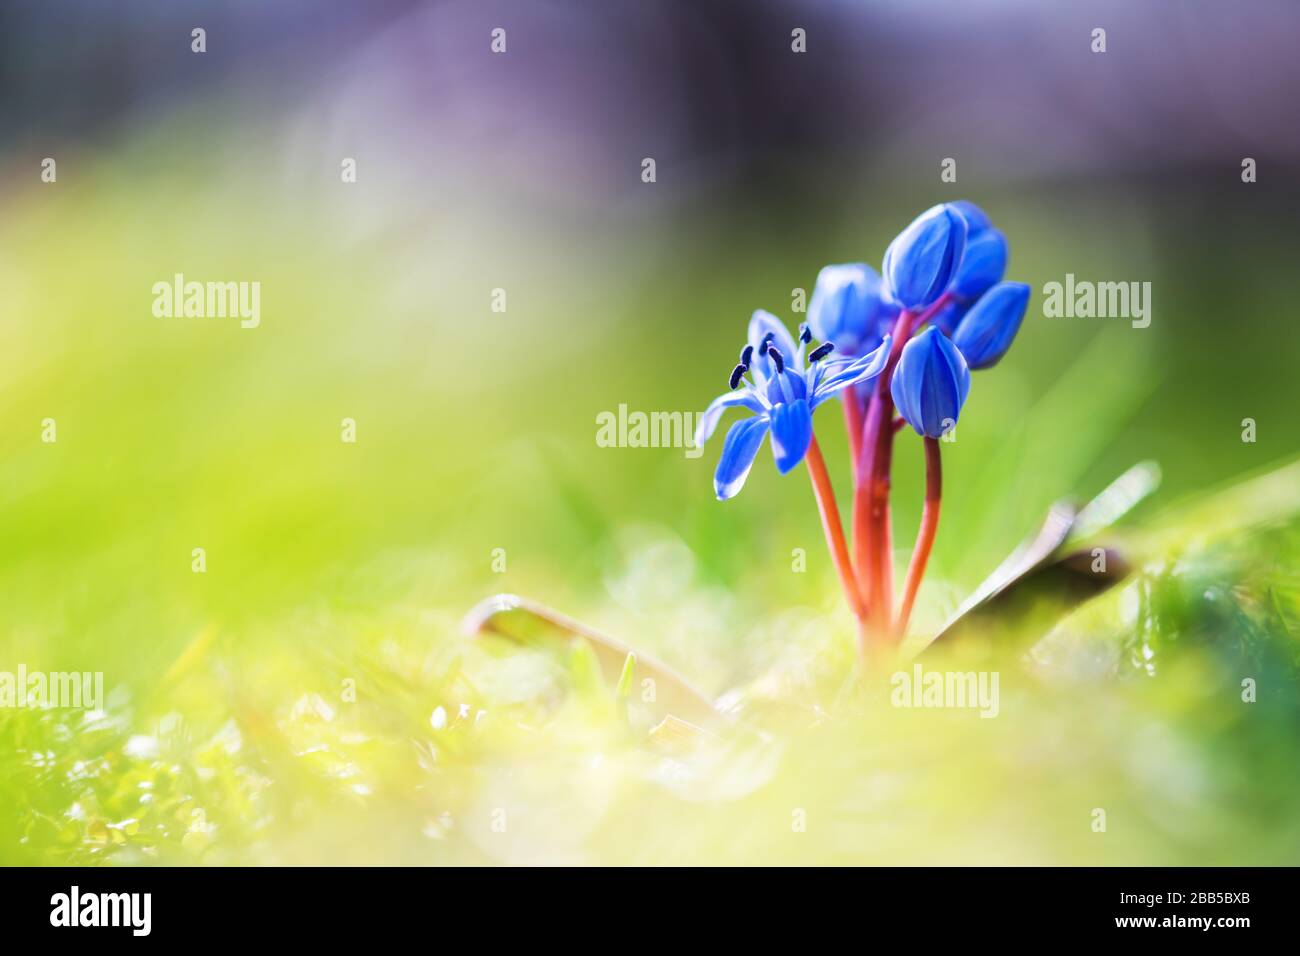 Biautiful blue spring flower on green grass background closeup. Nature macro photography Stock Photo